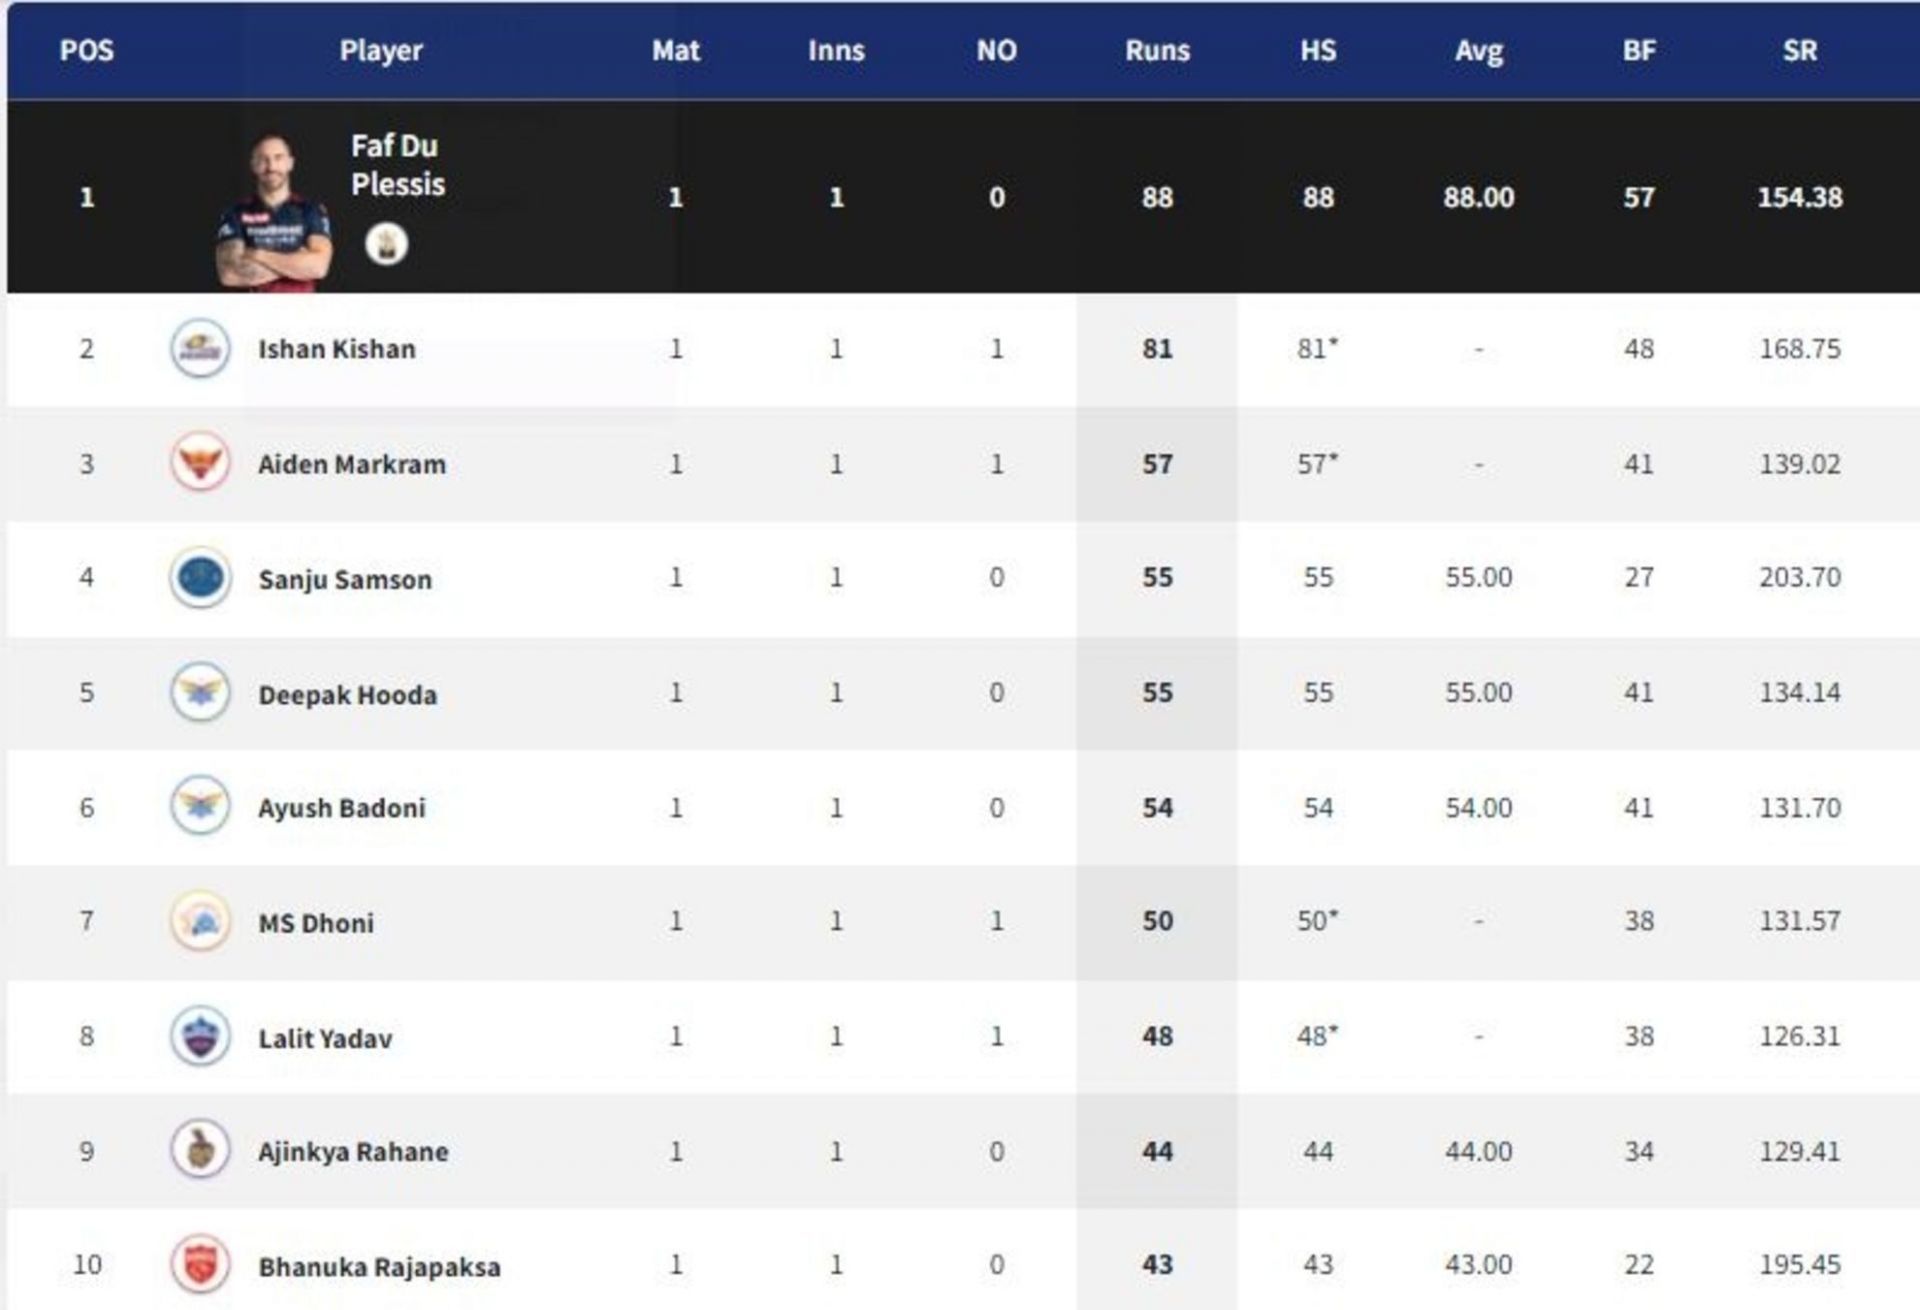 Faf du Plessis currently holds the Orange Cap with 88 runs (PC: IPLT20.com)